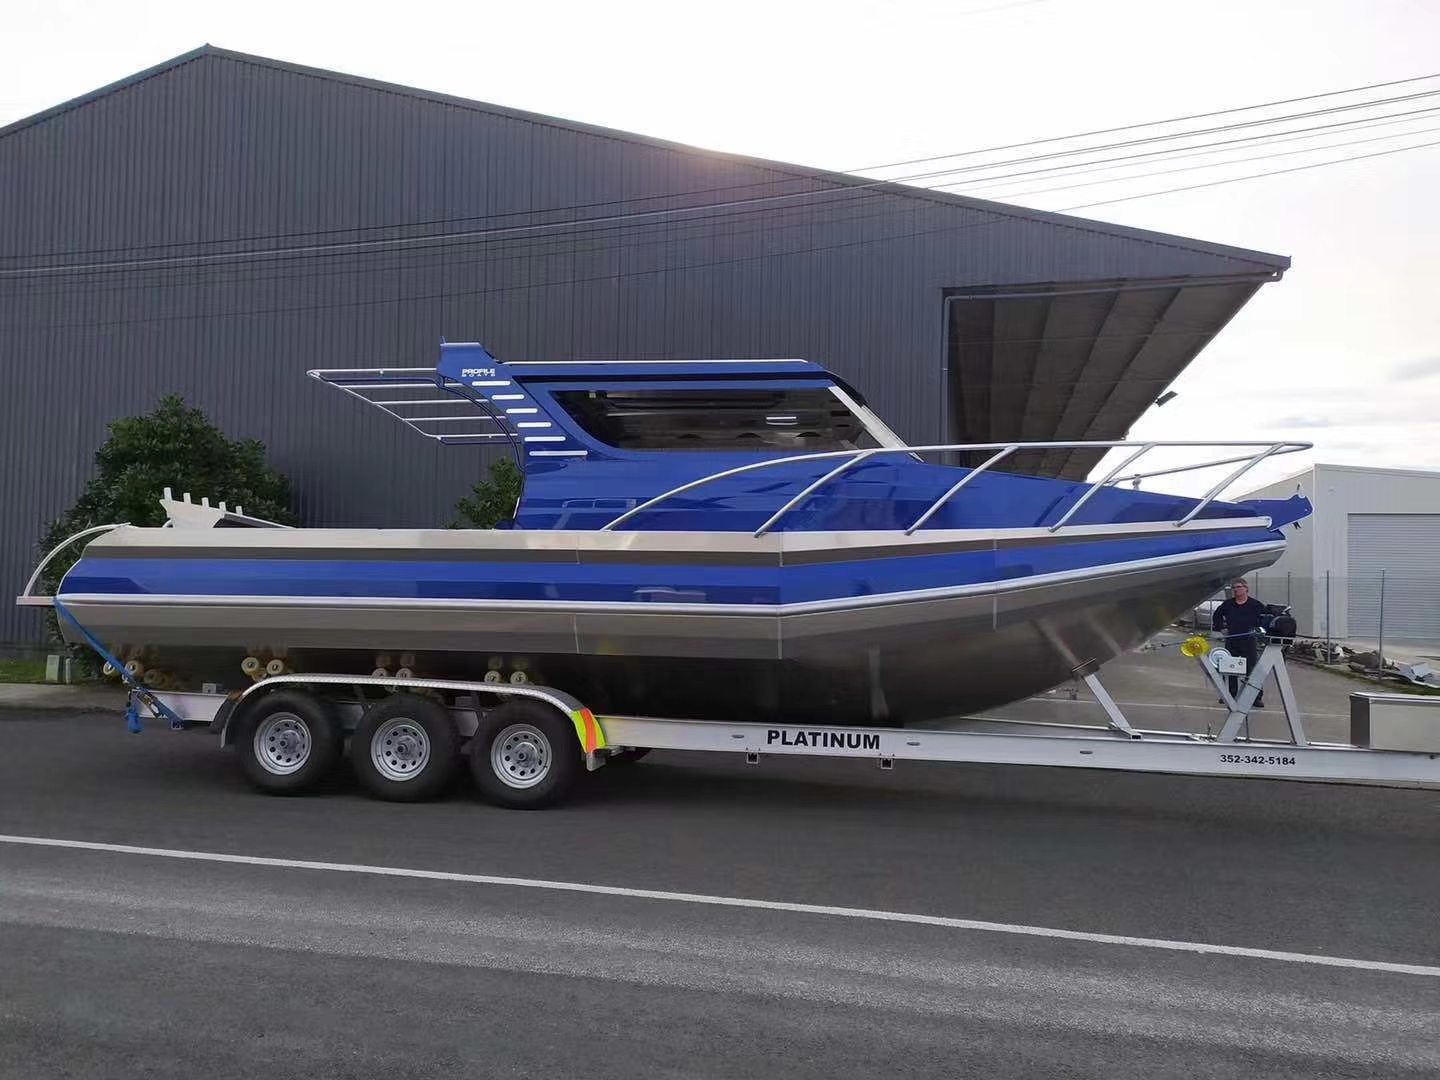 Grandsea 32ft 9.6m Full Cabin Aluminum Easy Craft Fishing Boat for Sale